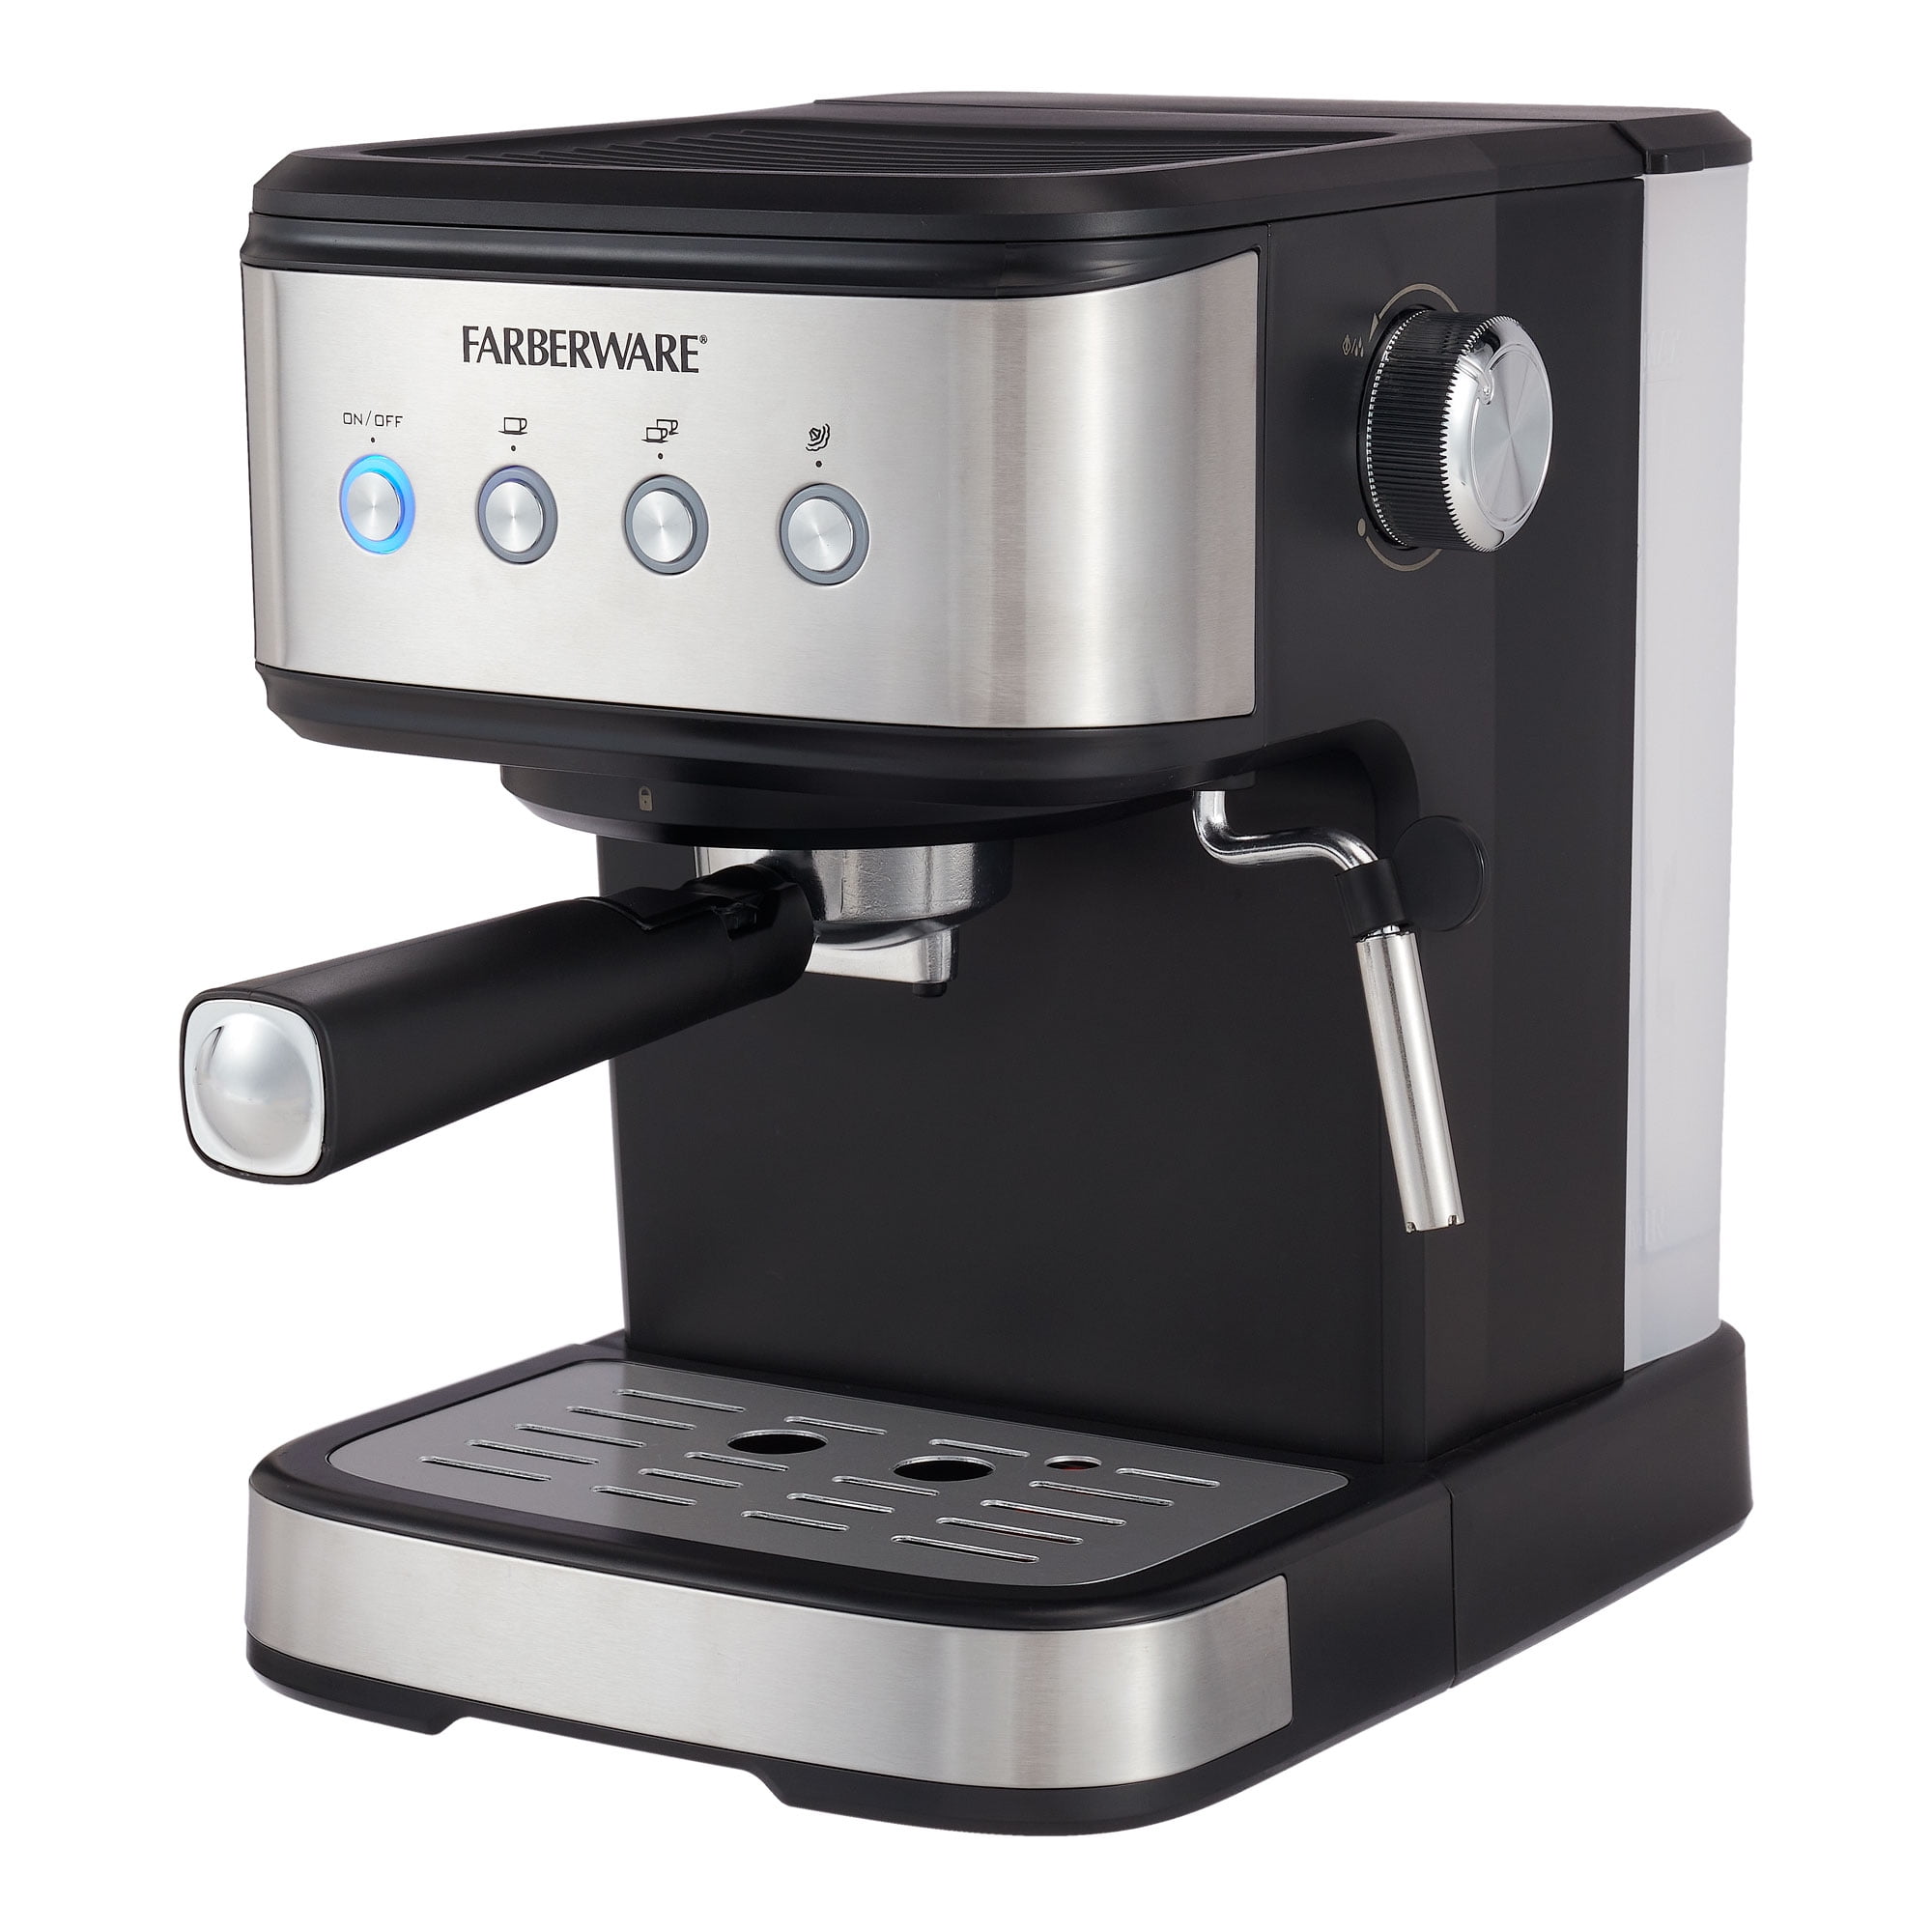 Farberware 1.5L 20 Bar Espresso with Removable Water Tank, and Black - Walmart.com